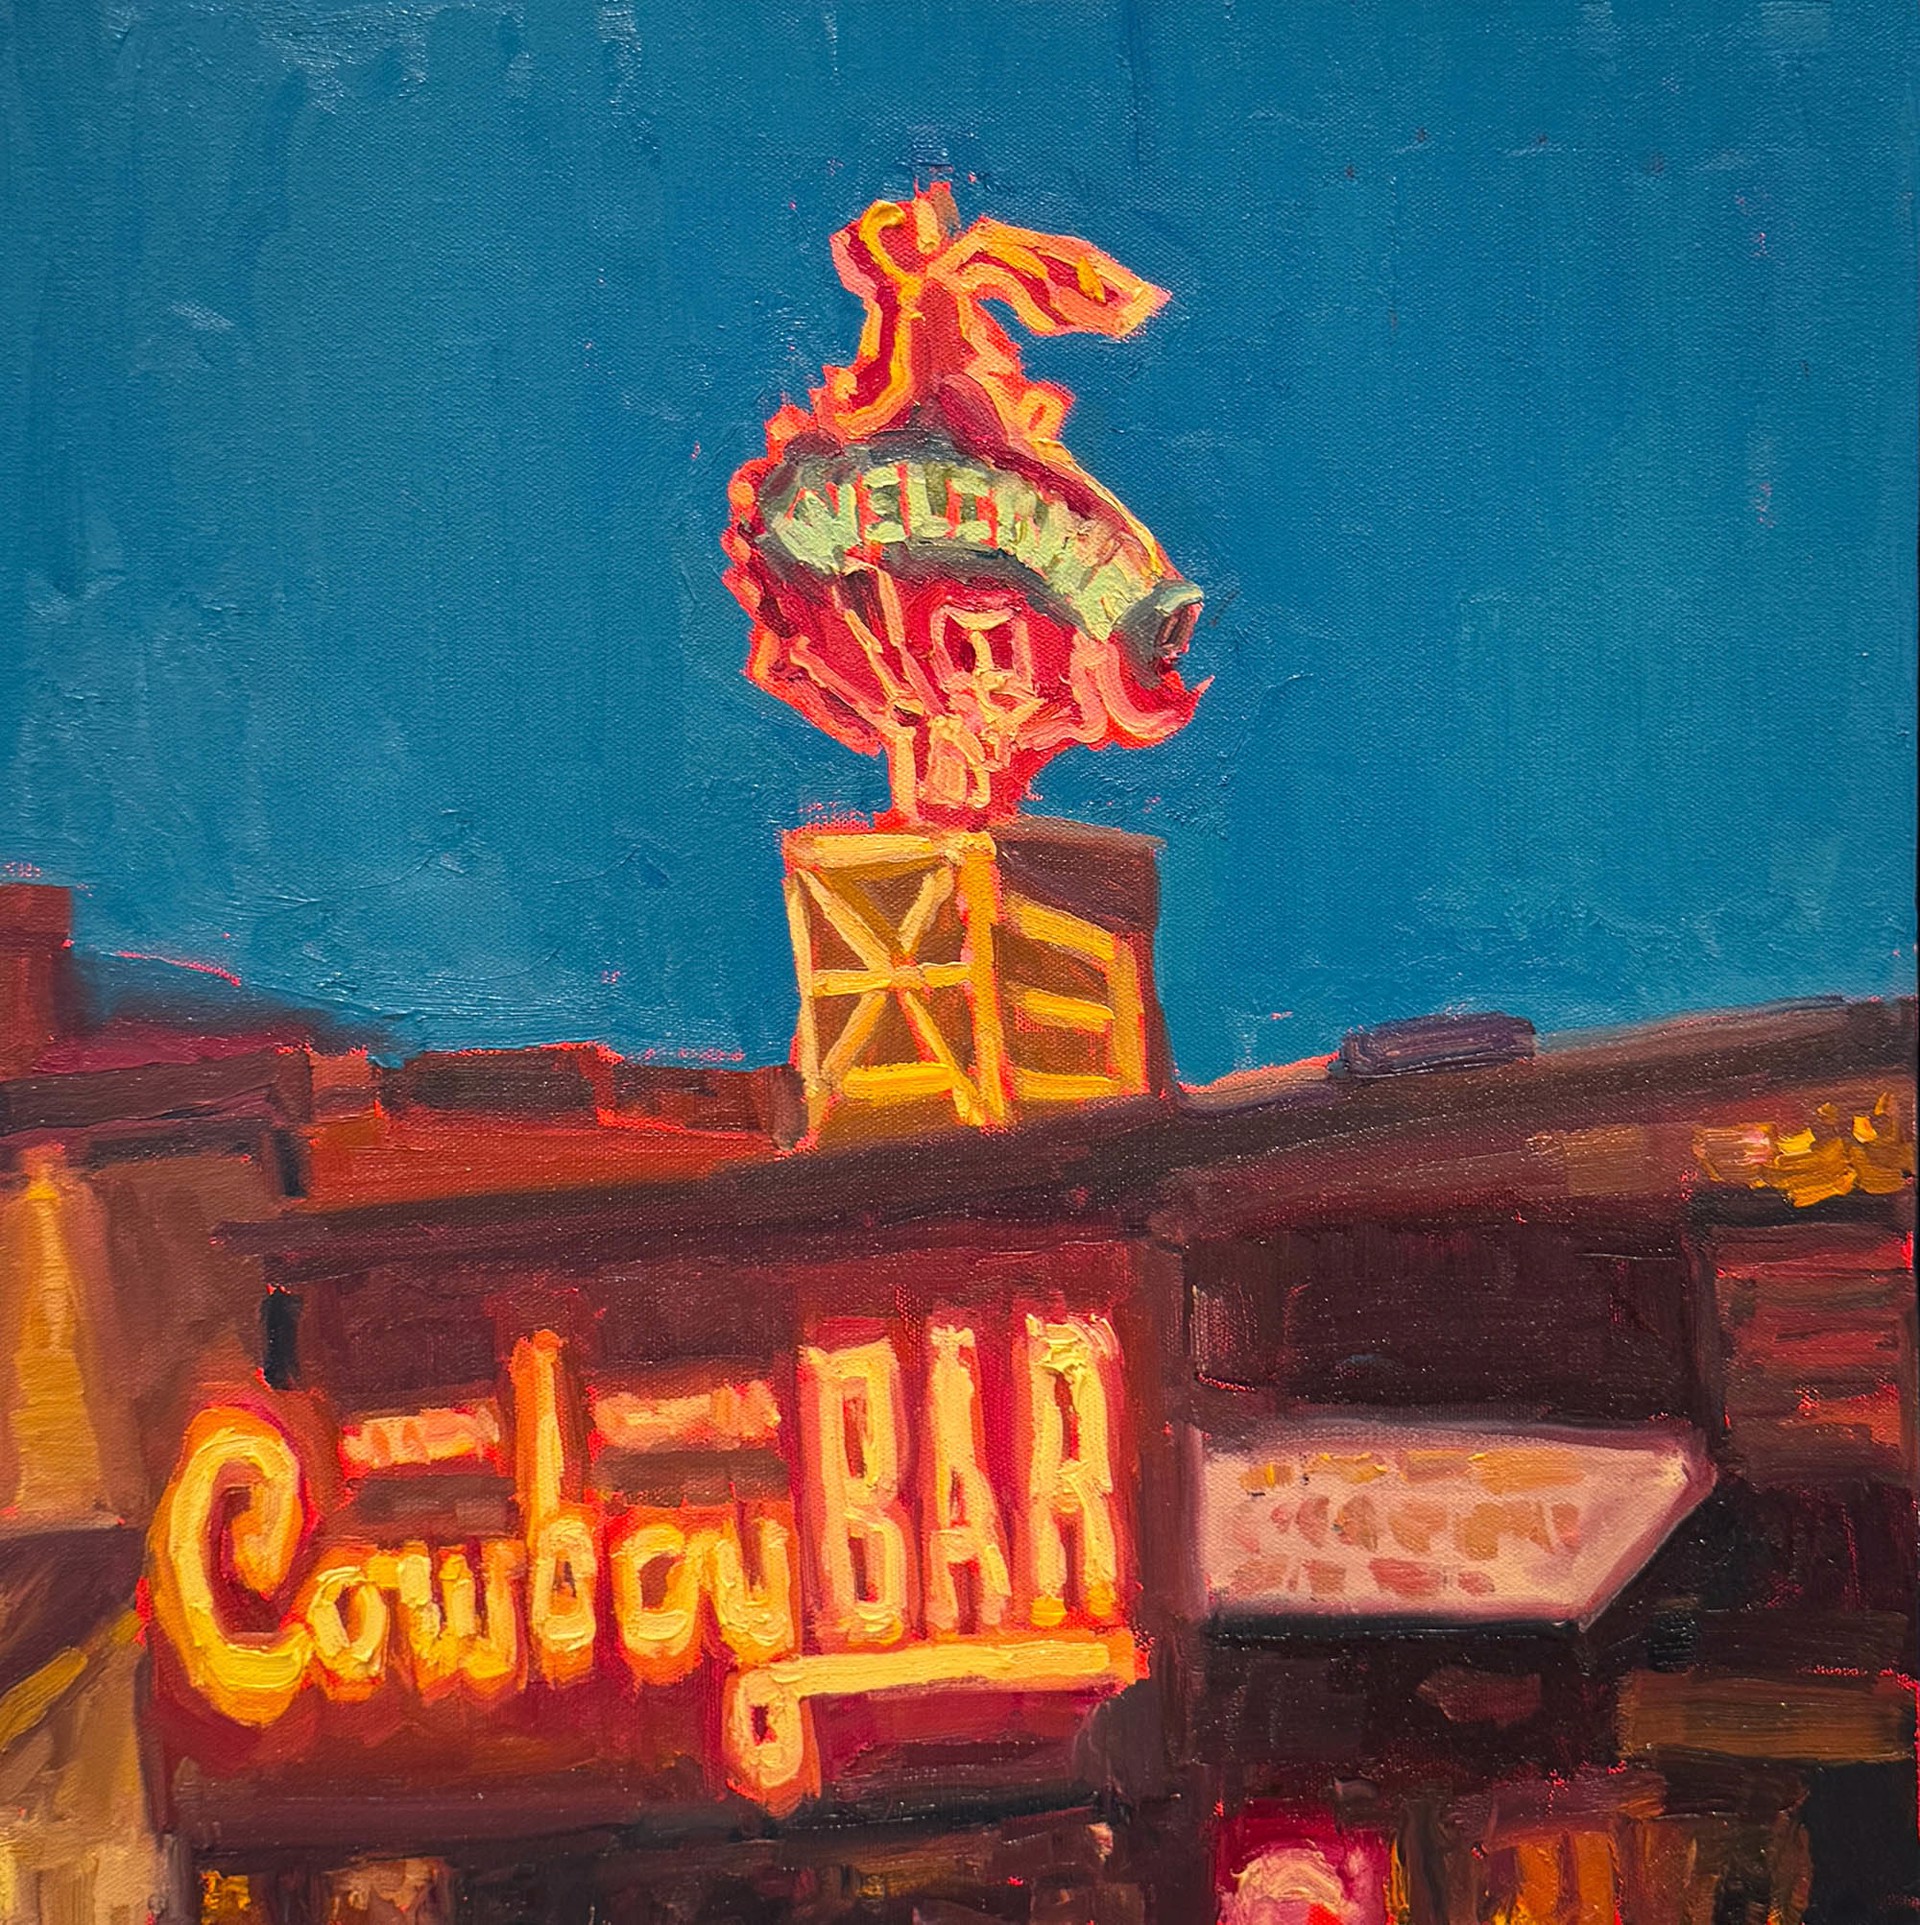 Original Oil Painting By Aaron Hazel Featuring The Million Dollar Cowboy Bar At Dusk